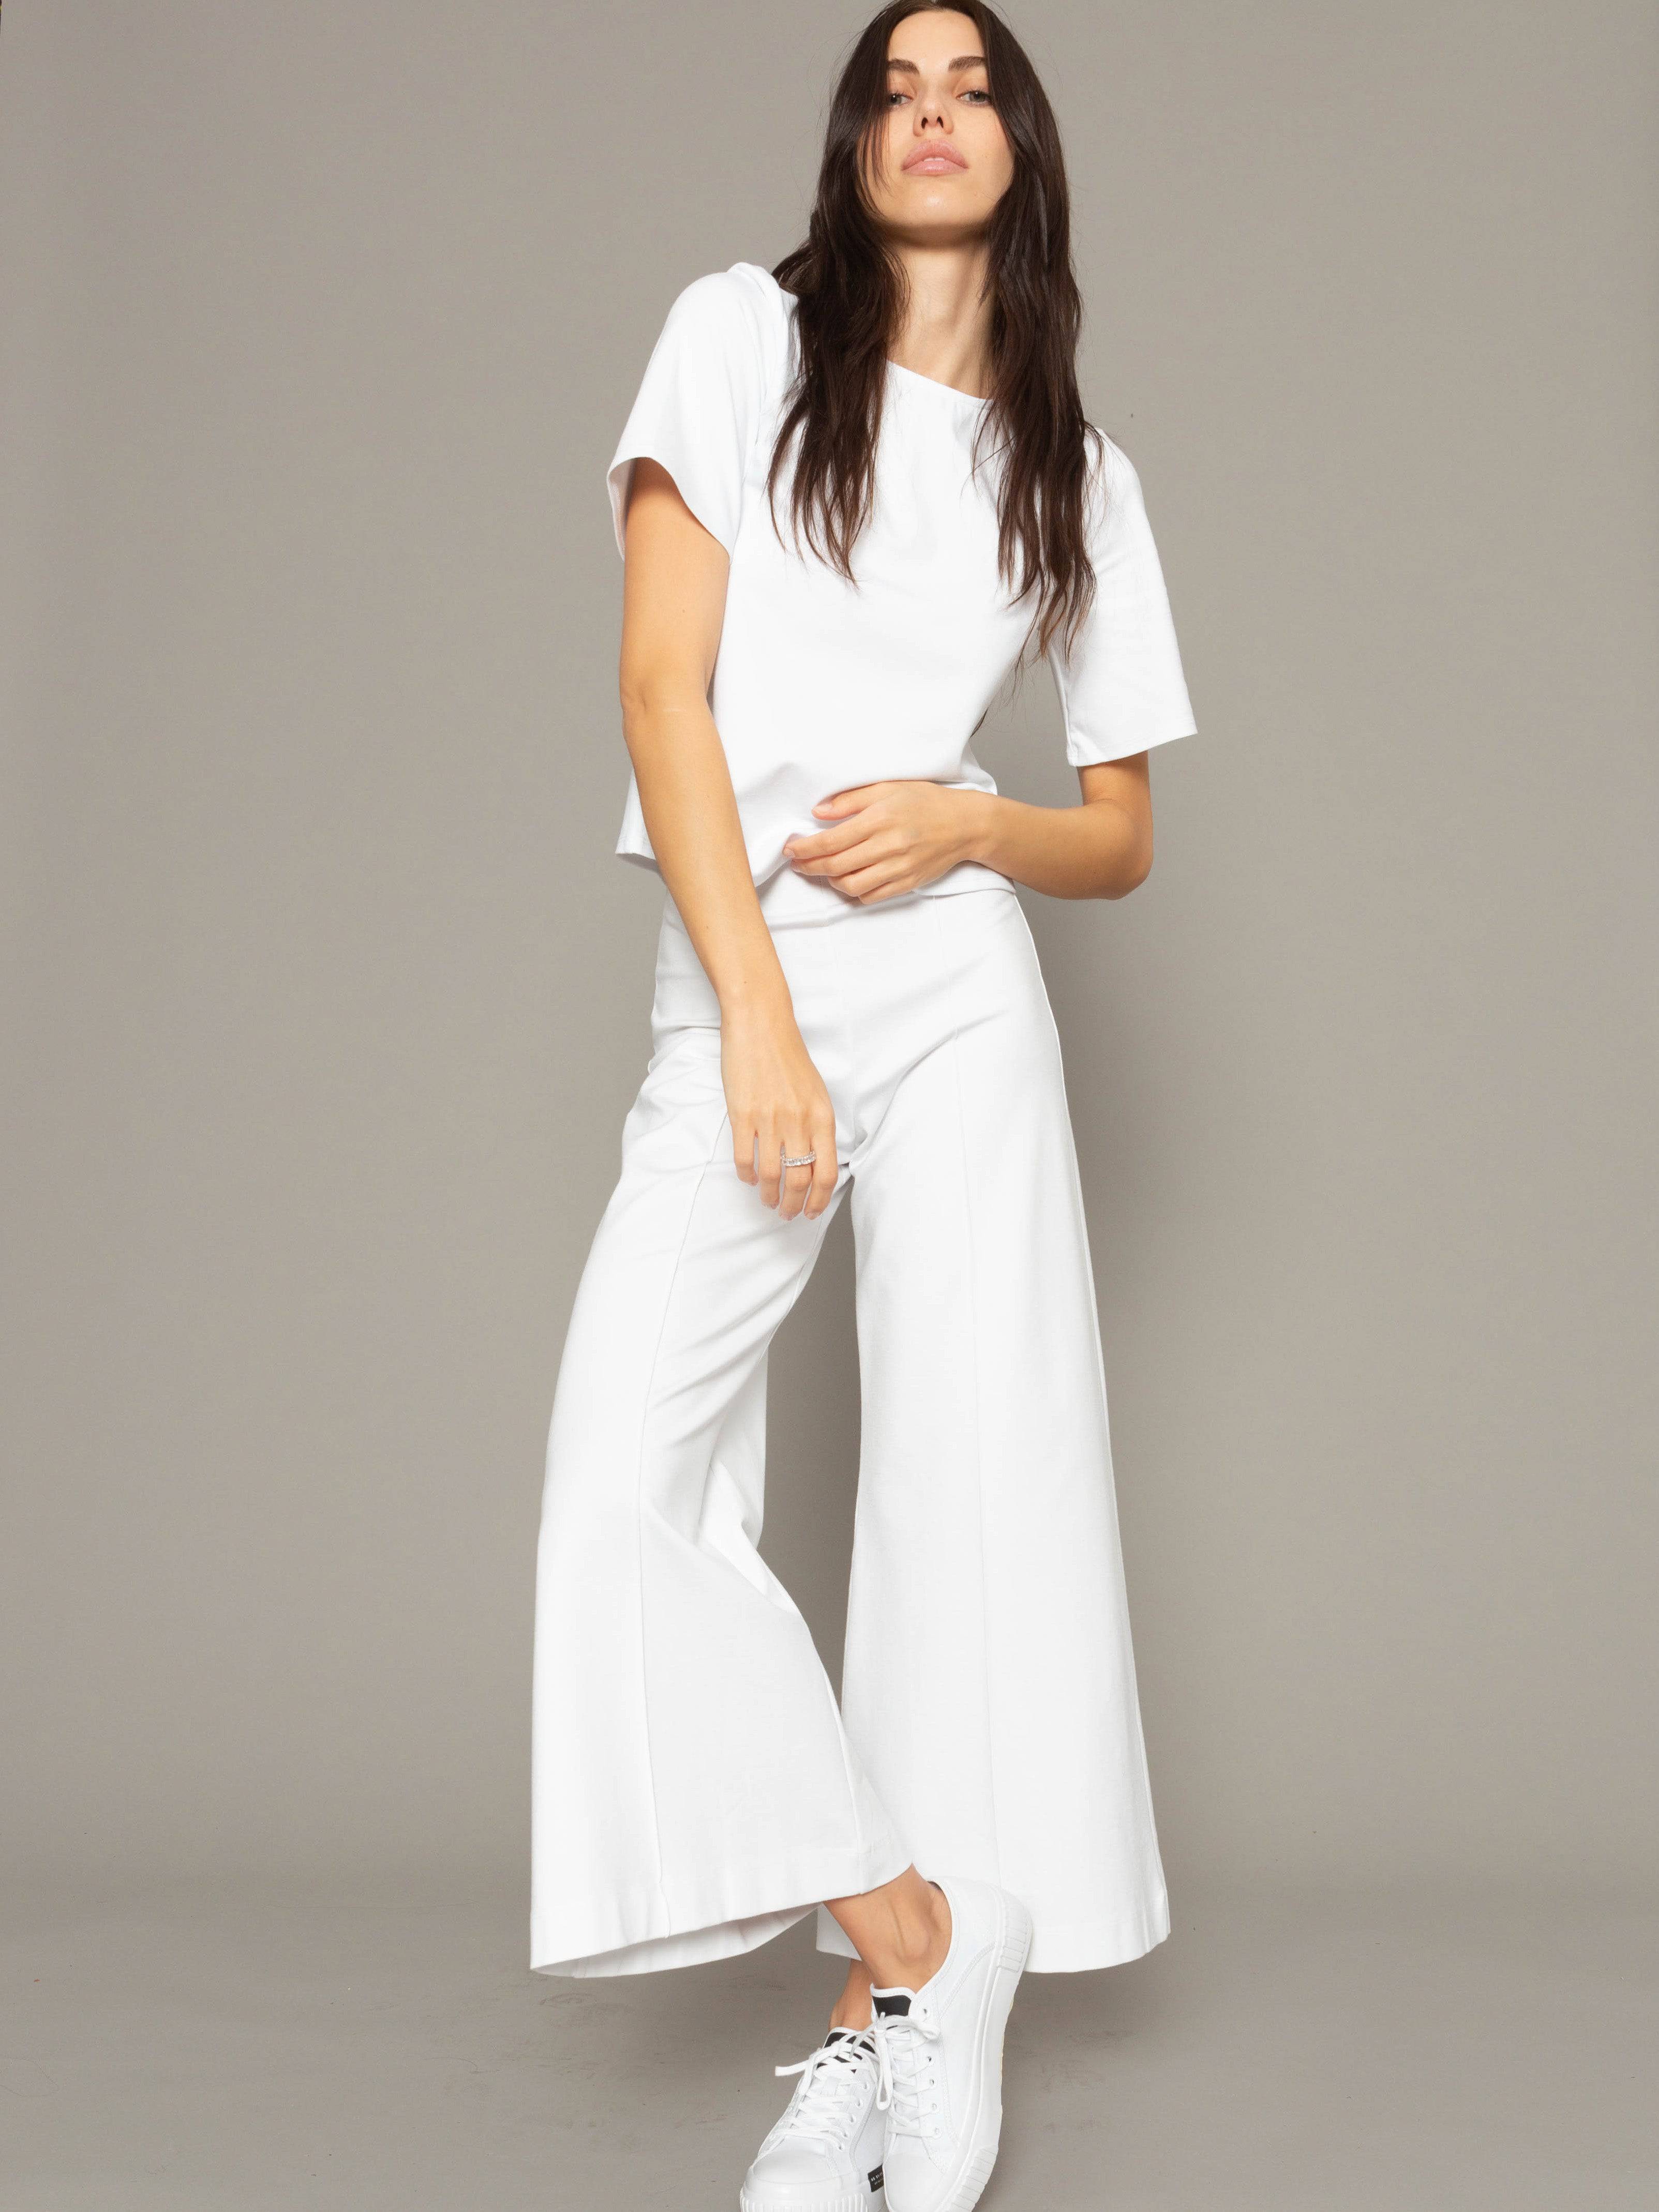 Women's White Jeans | Explore our New Arrivals | ZARA India